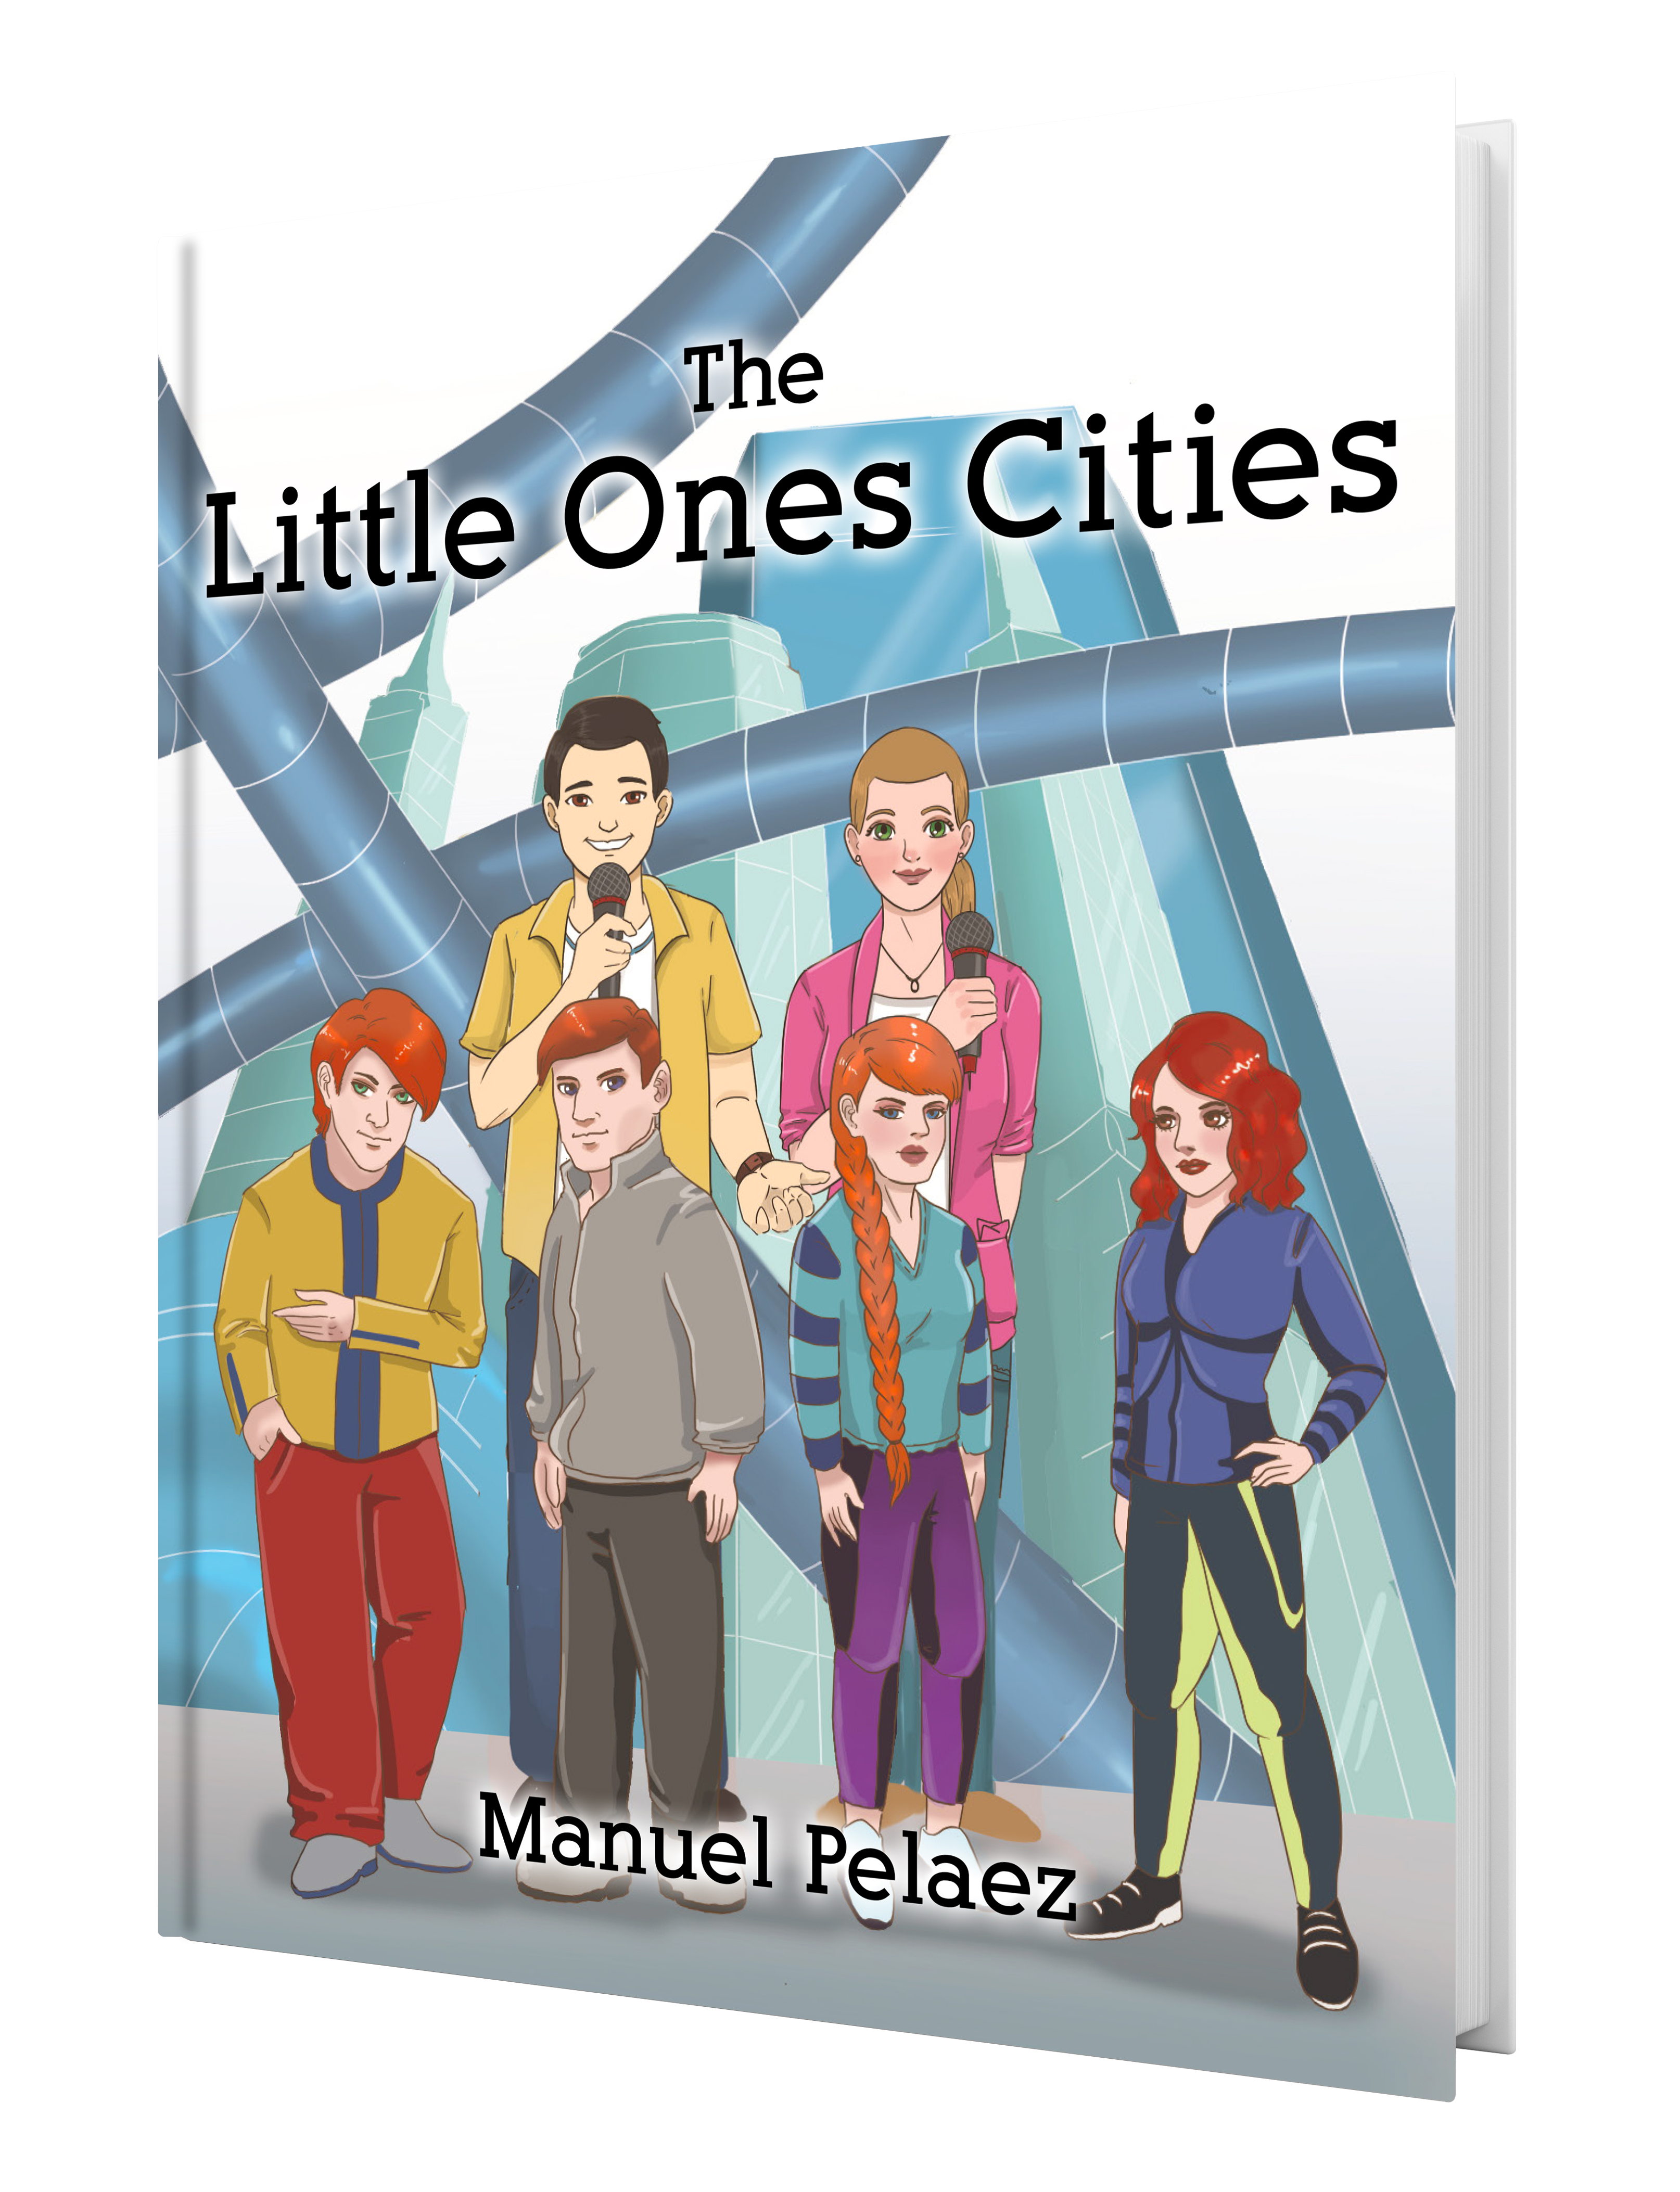 The Little Ones Cities